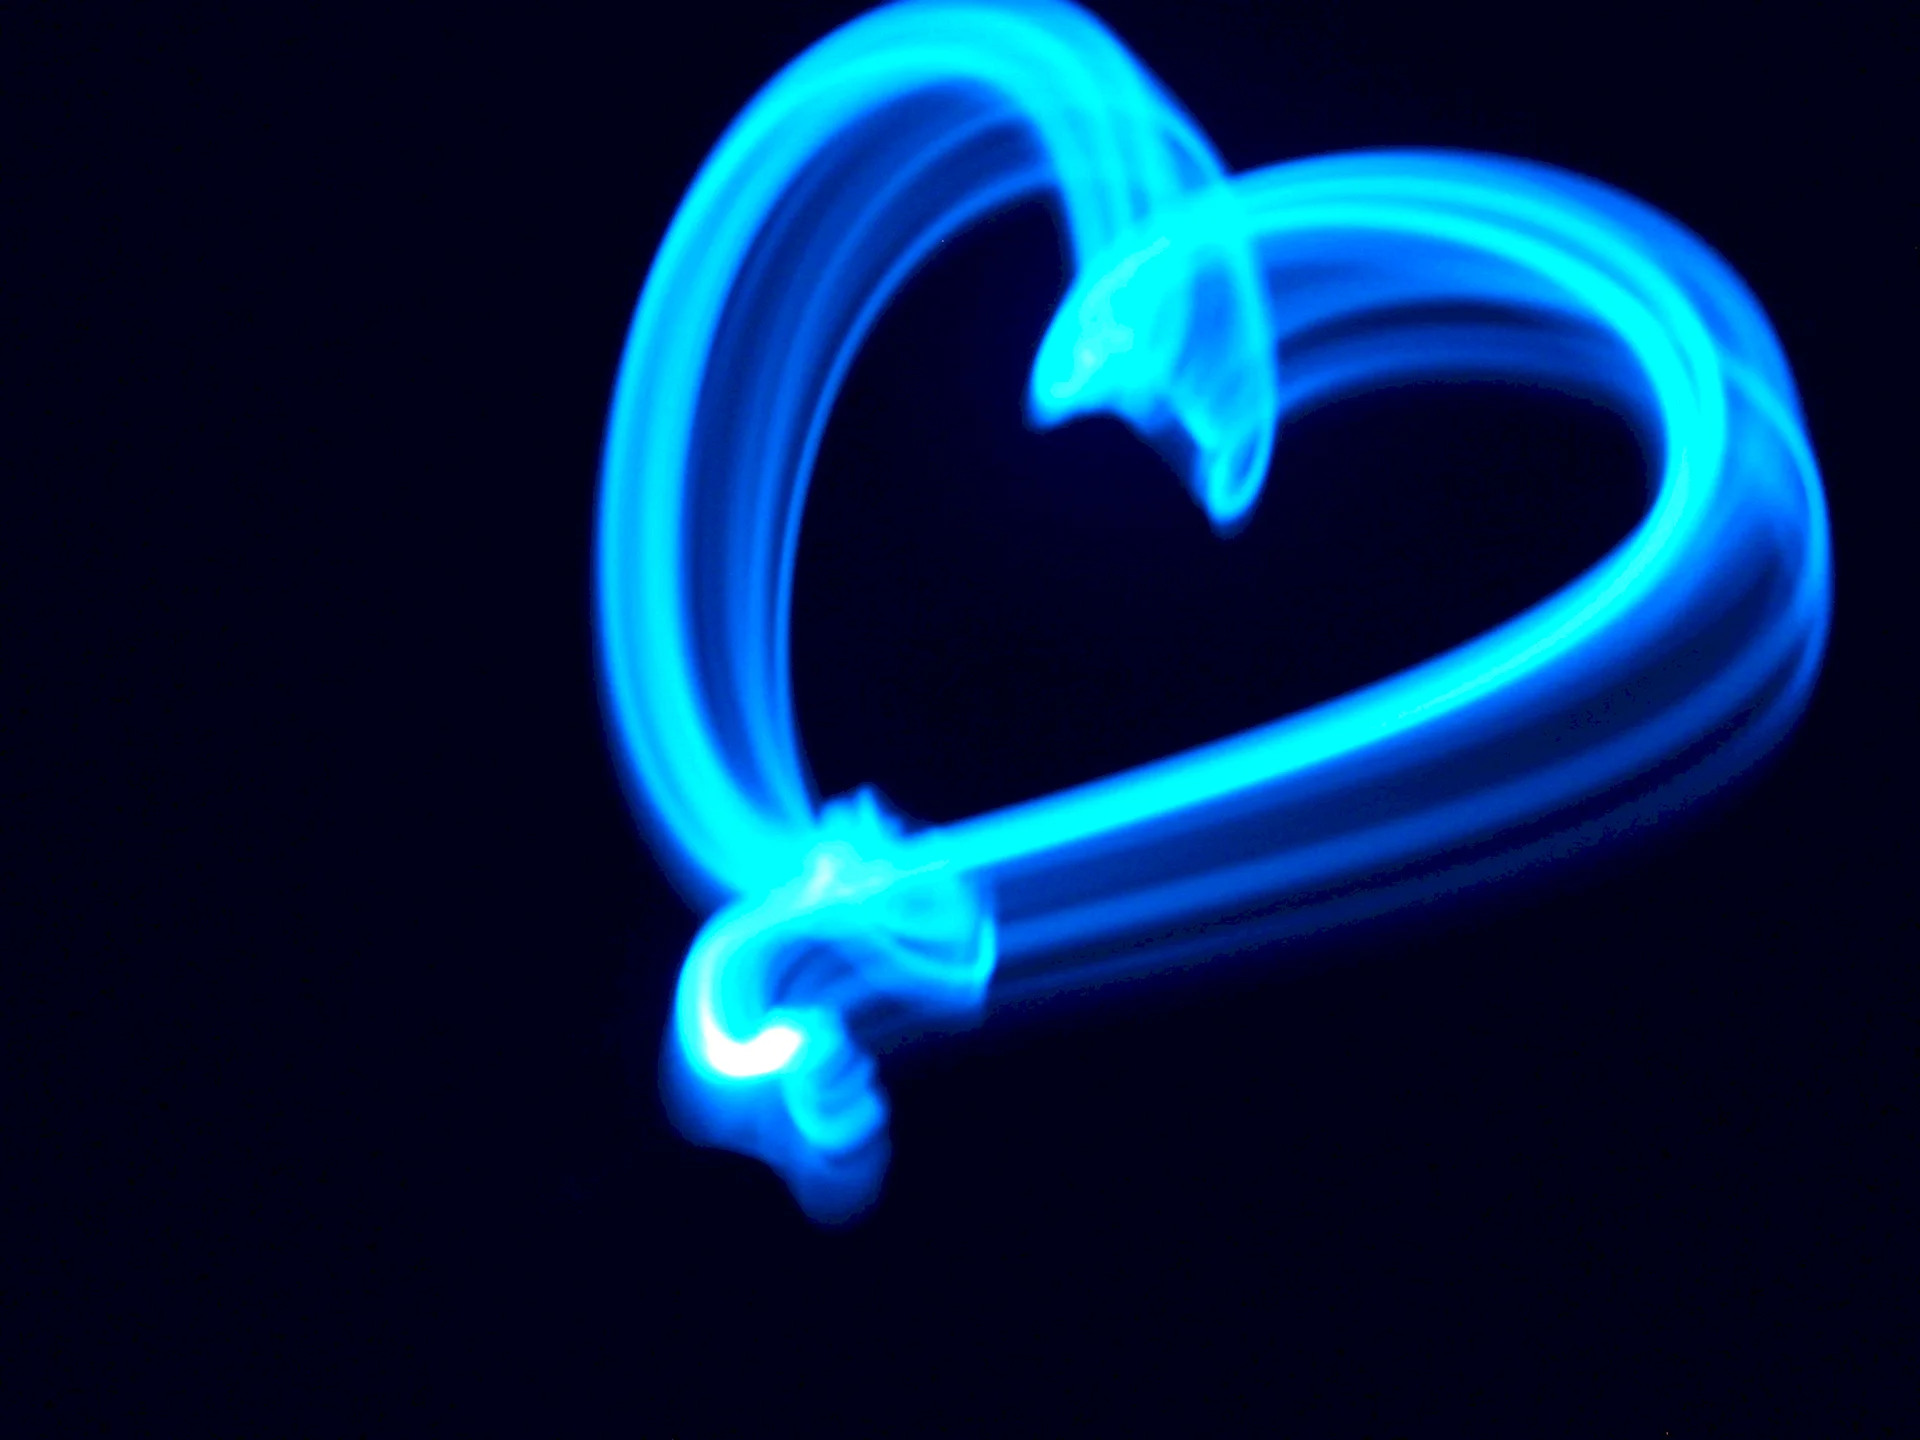 Neon Blue Heart Wallpaper